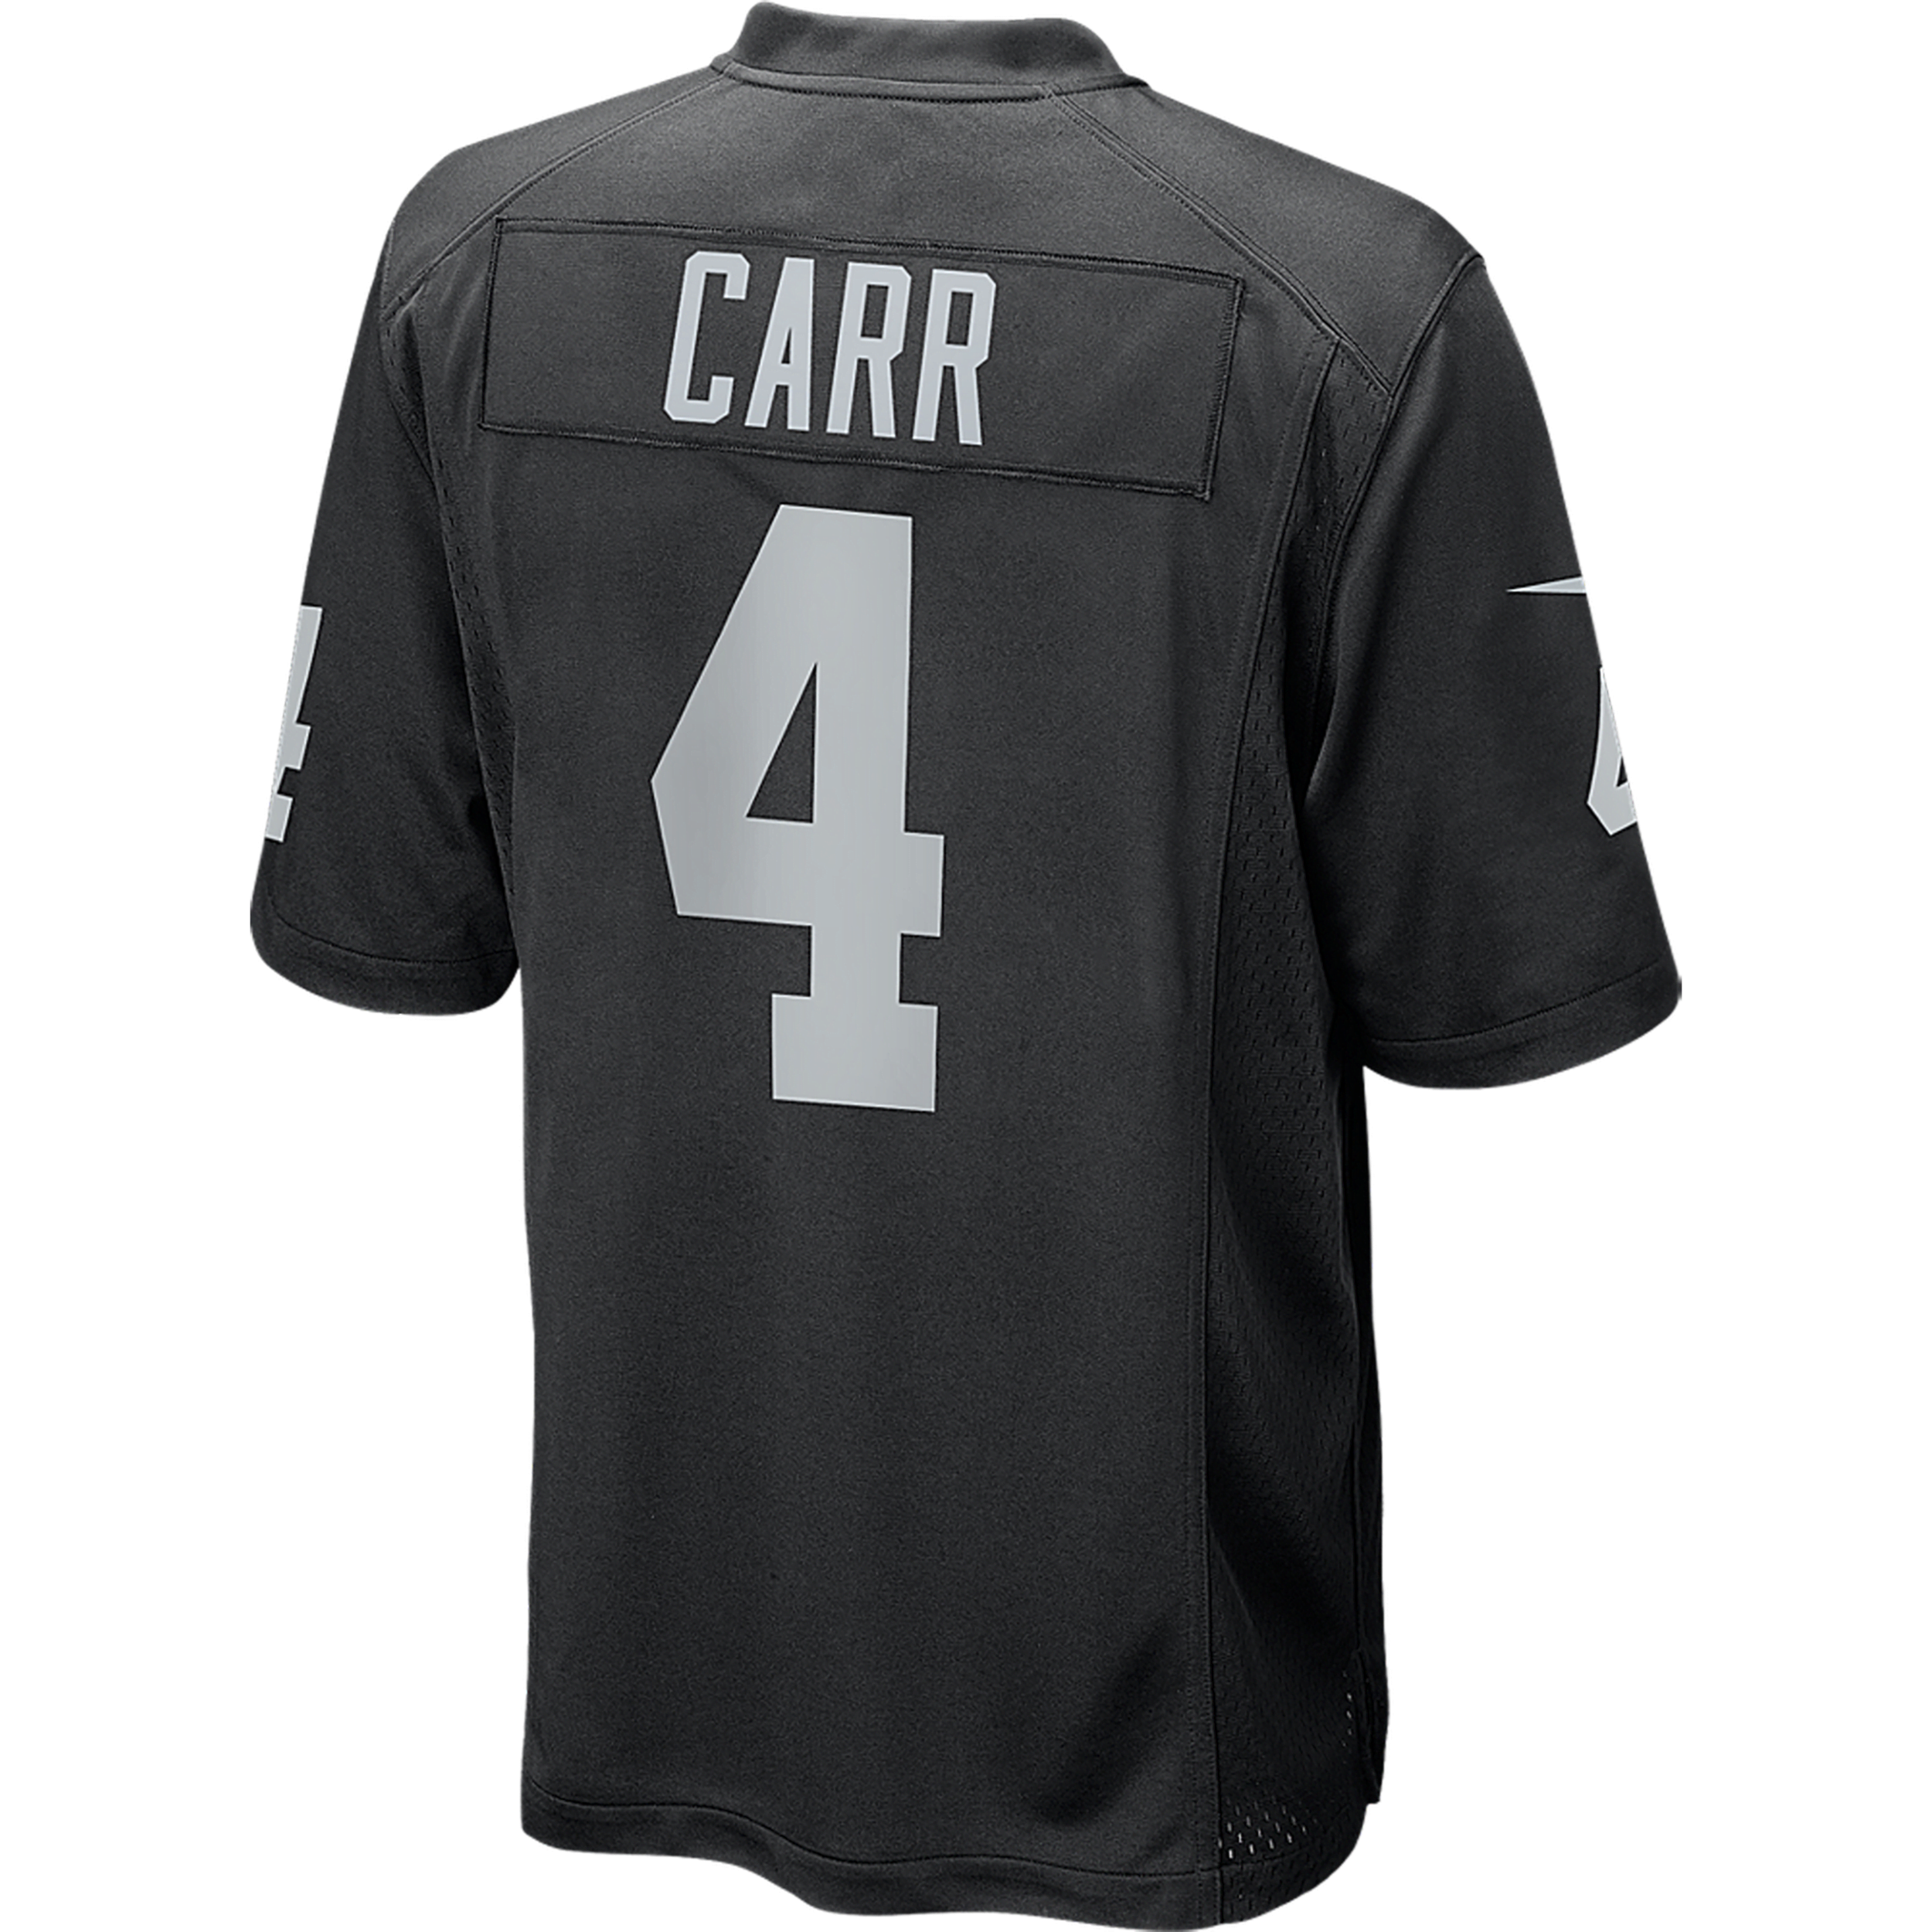 Nike NFL Las Vegas Raiders (Derek Carr) American-football-wedstrijdjersey voor heren Zwart